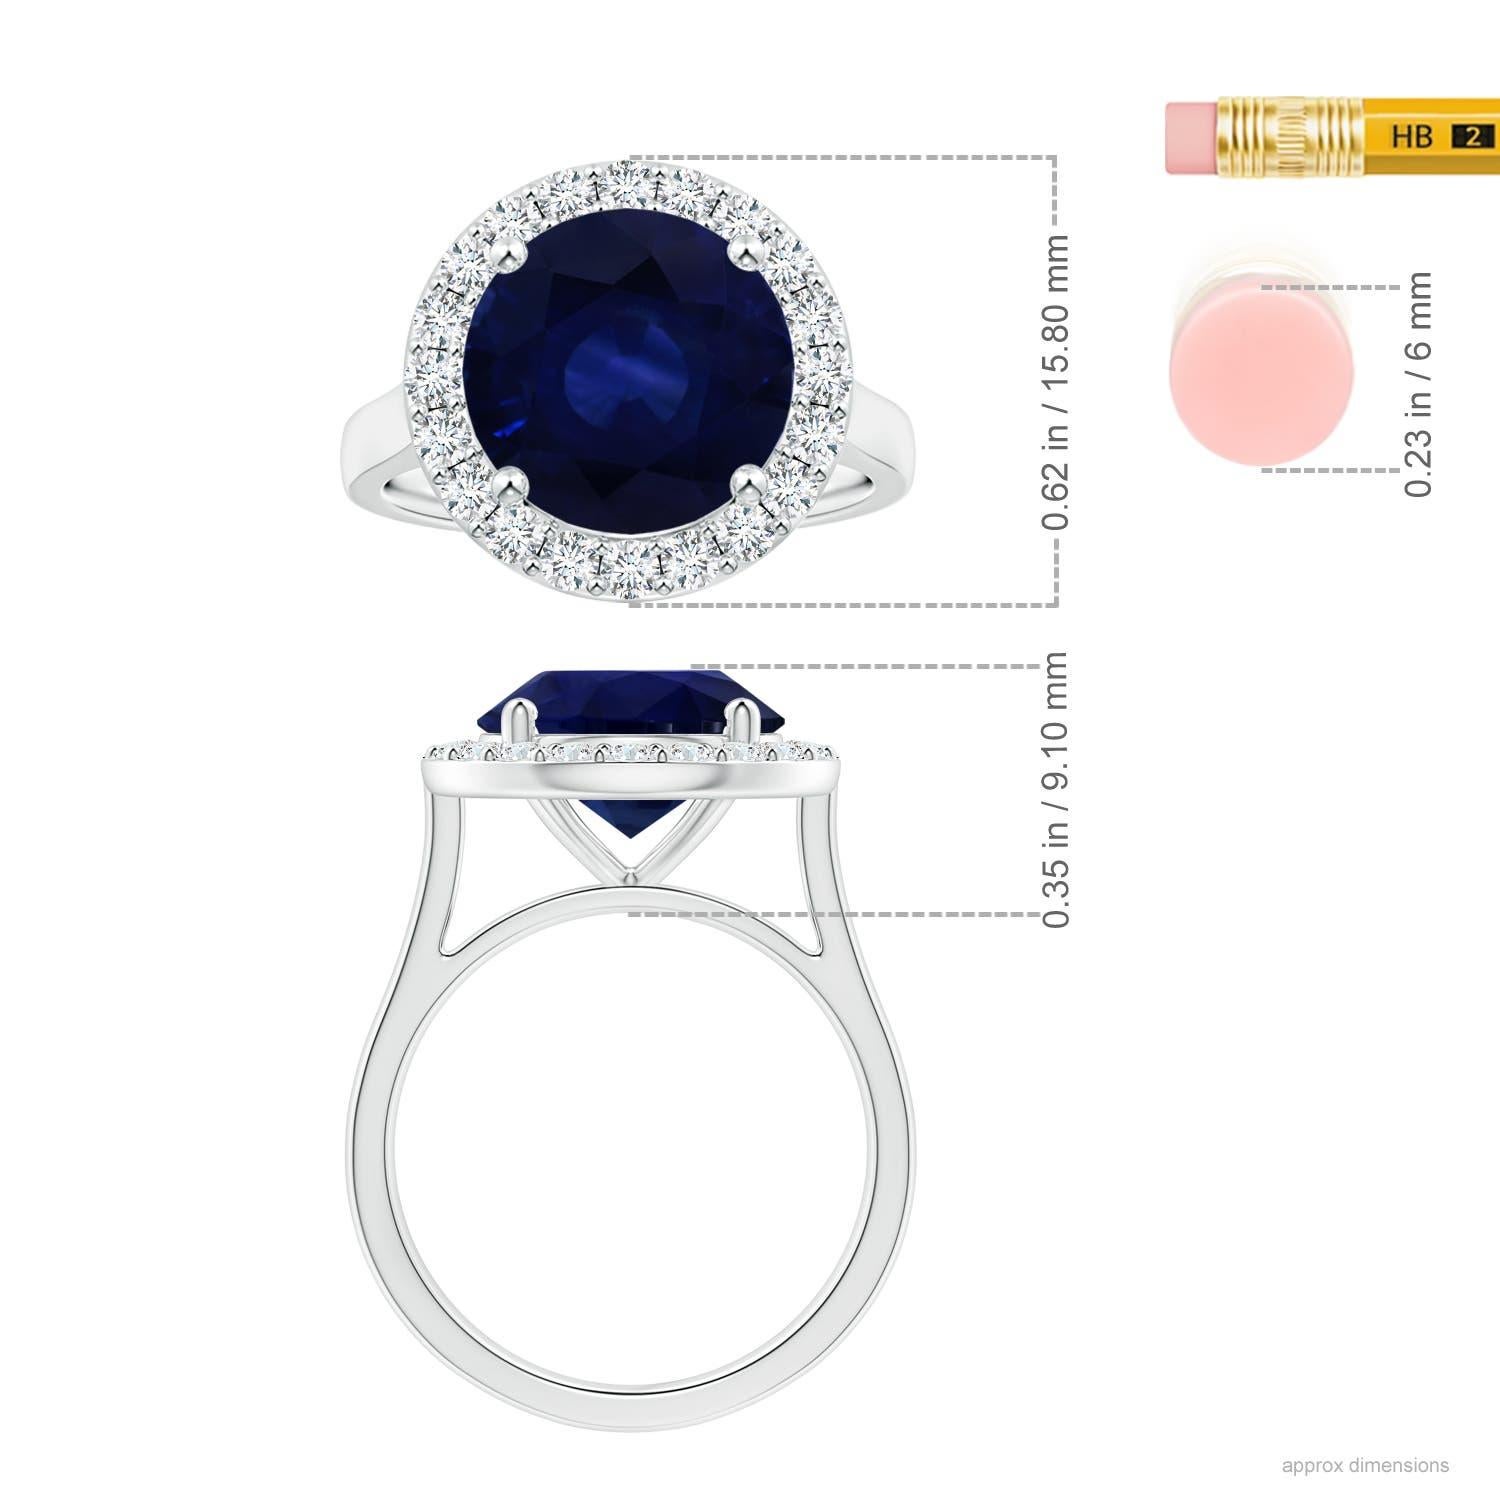 En vente :  ANGARA Bague en platine avec saphir bleu naturel certifié GIA de 6,63 carats et diamants 2